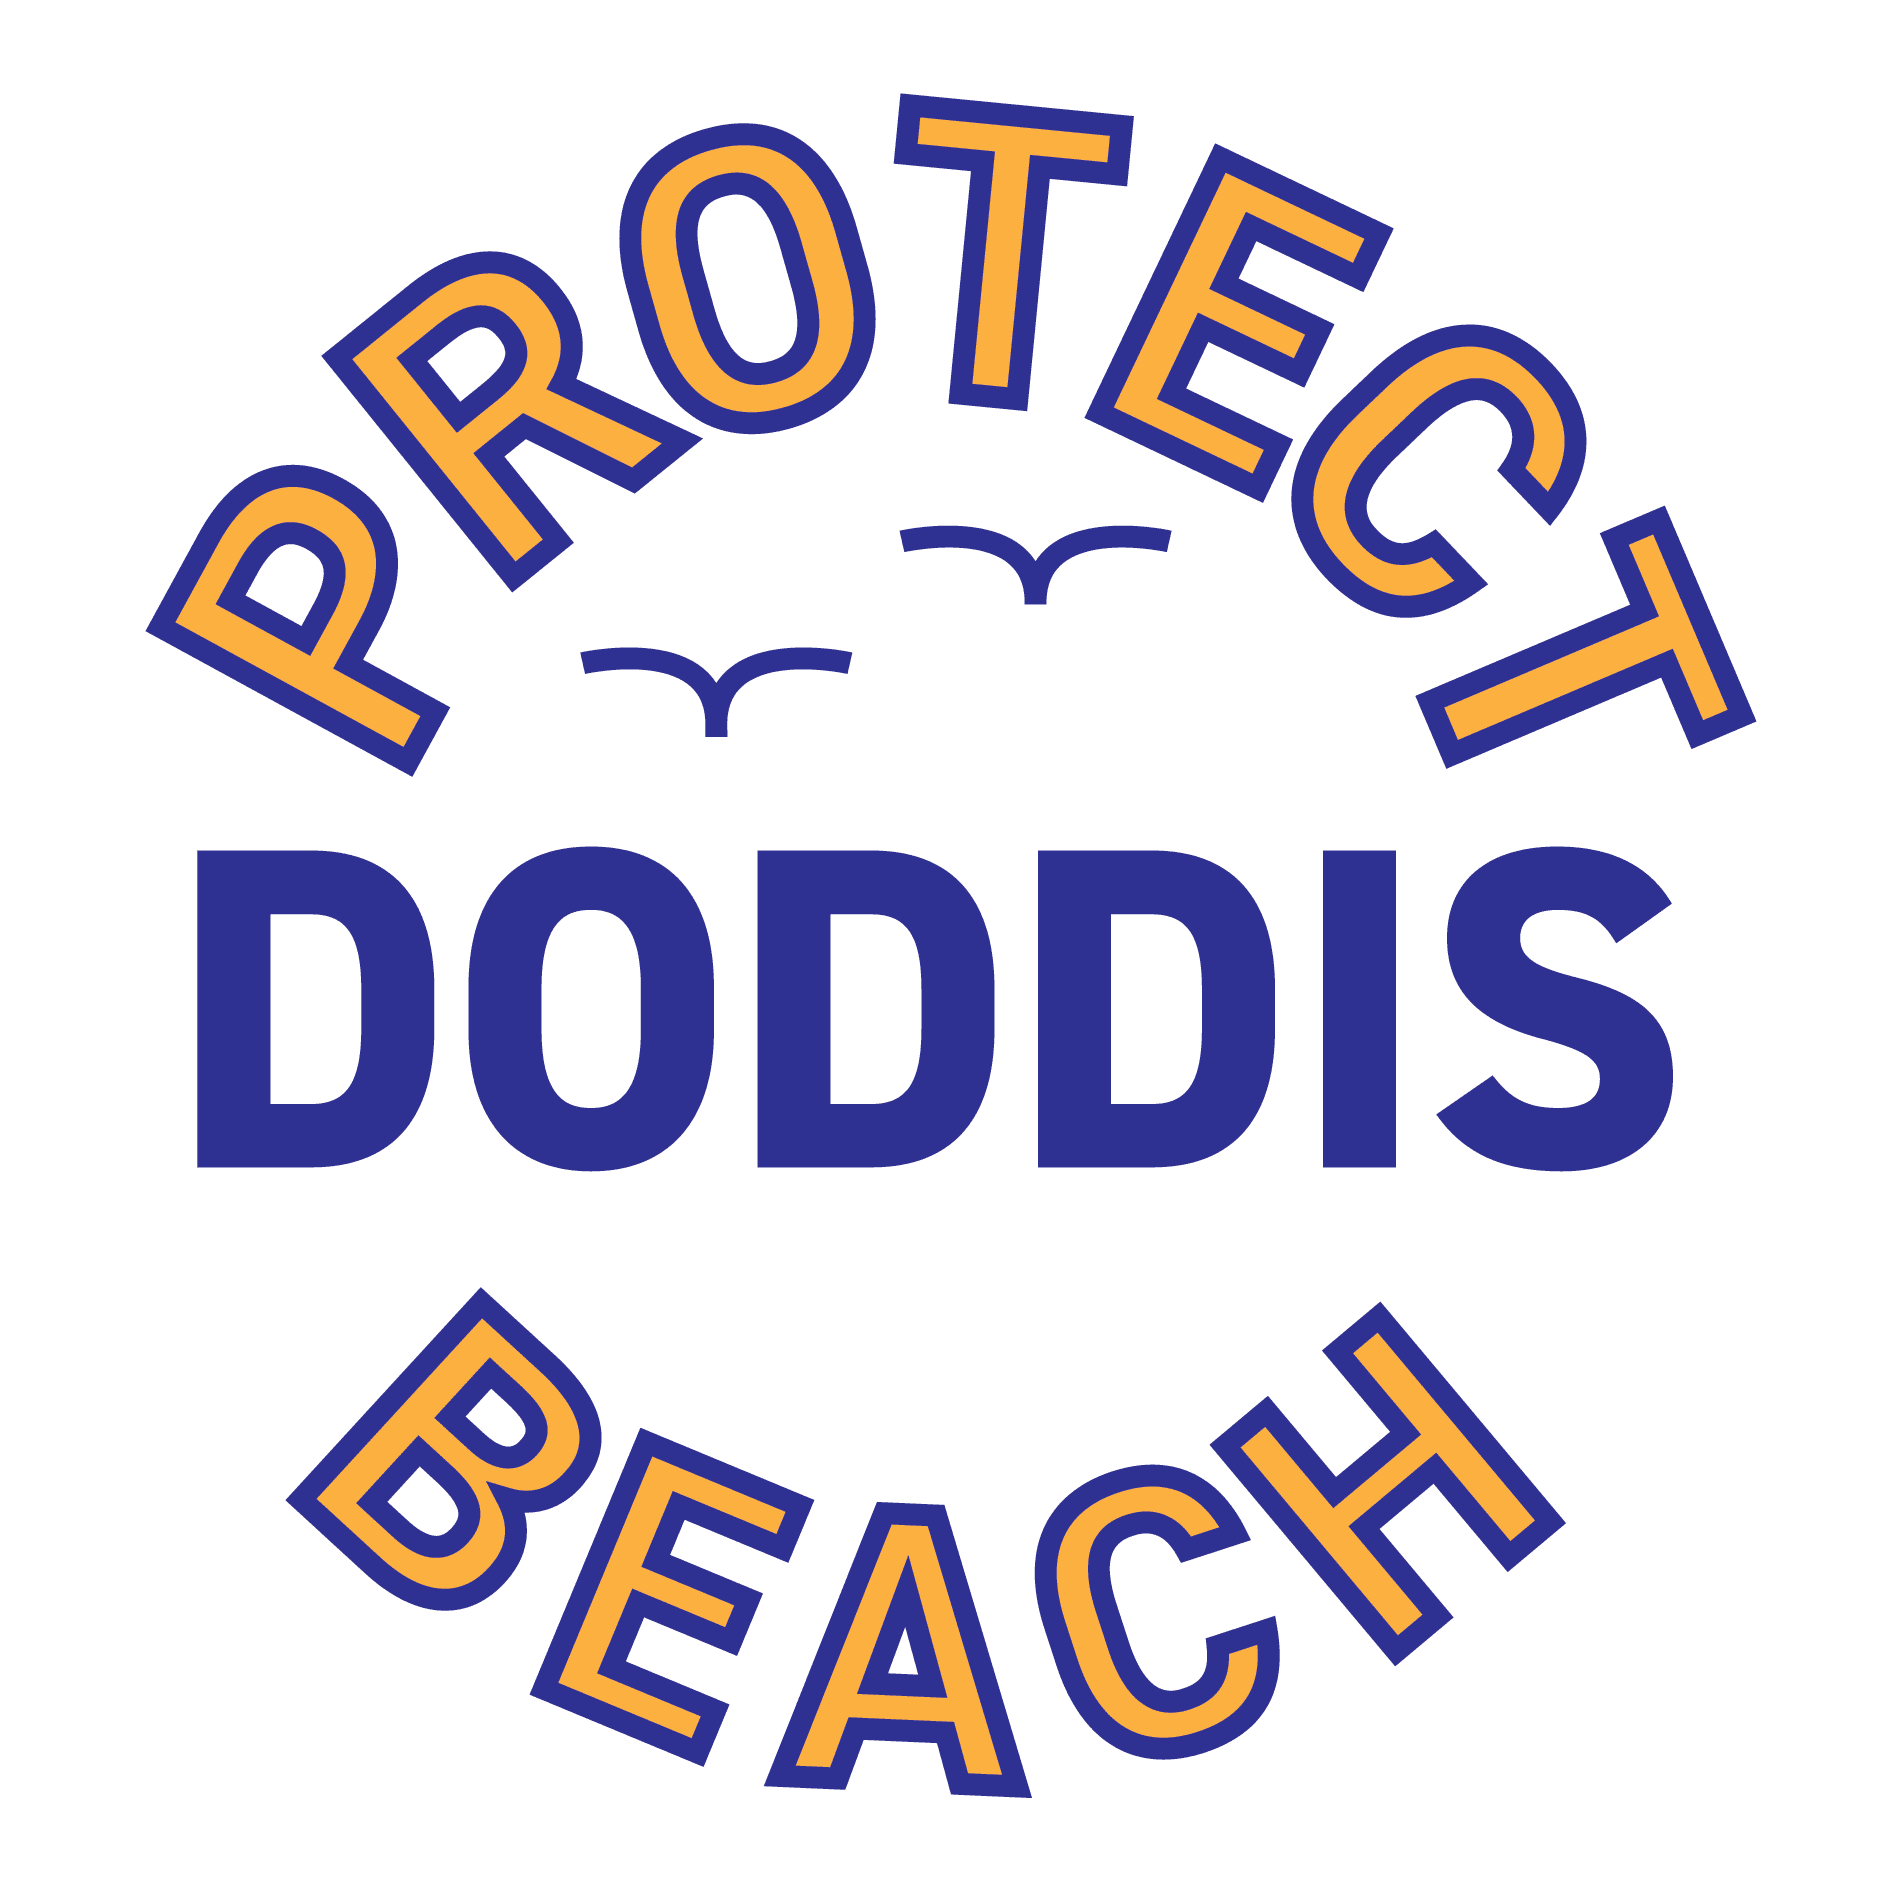 Protect Doddis Beach logo